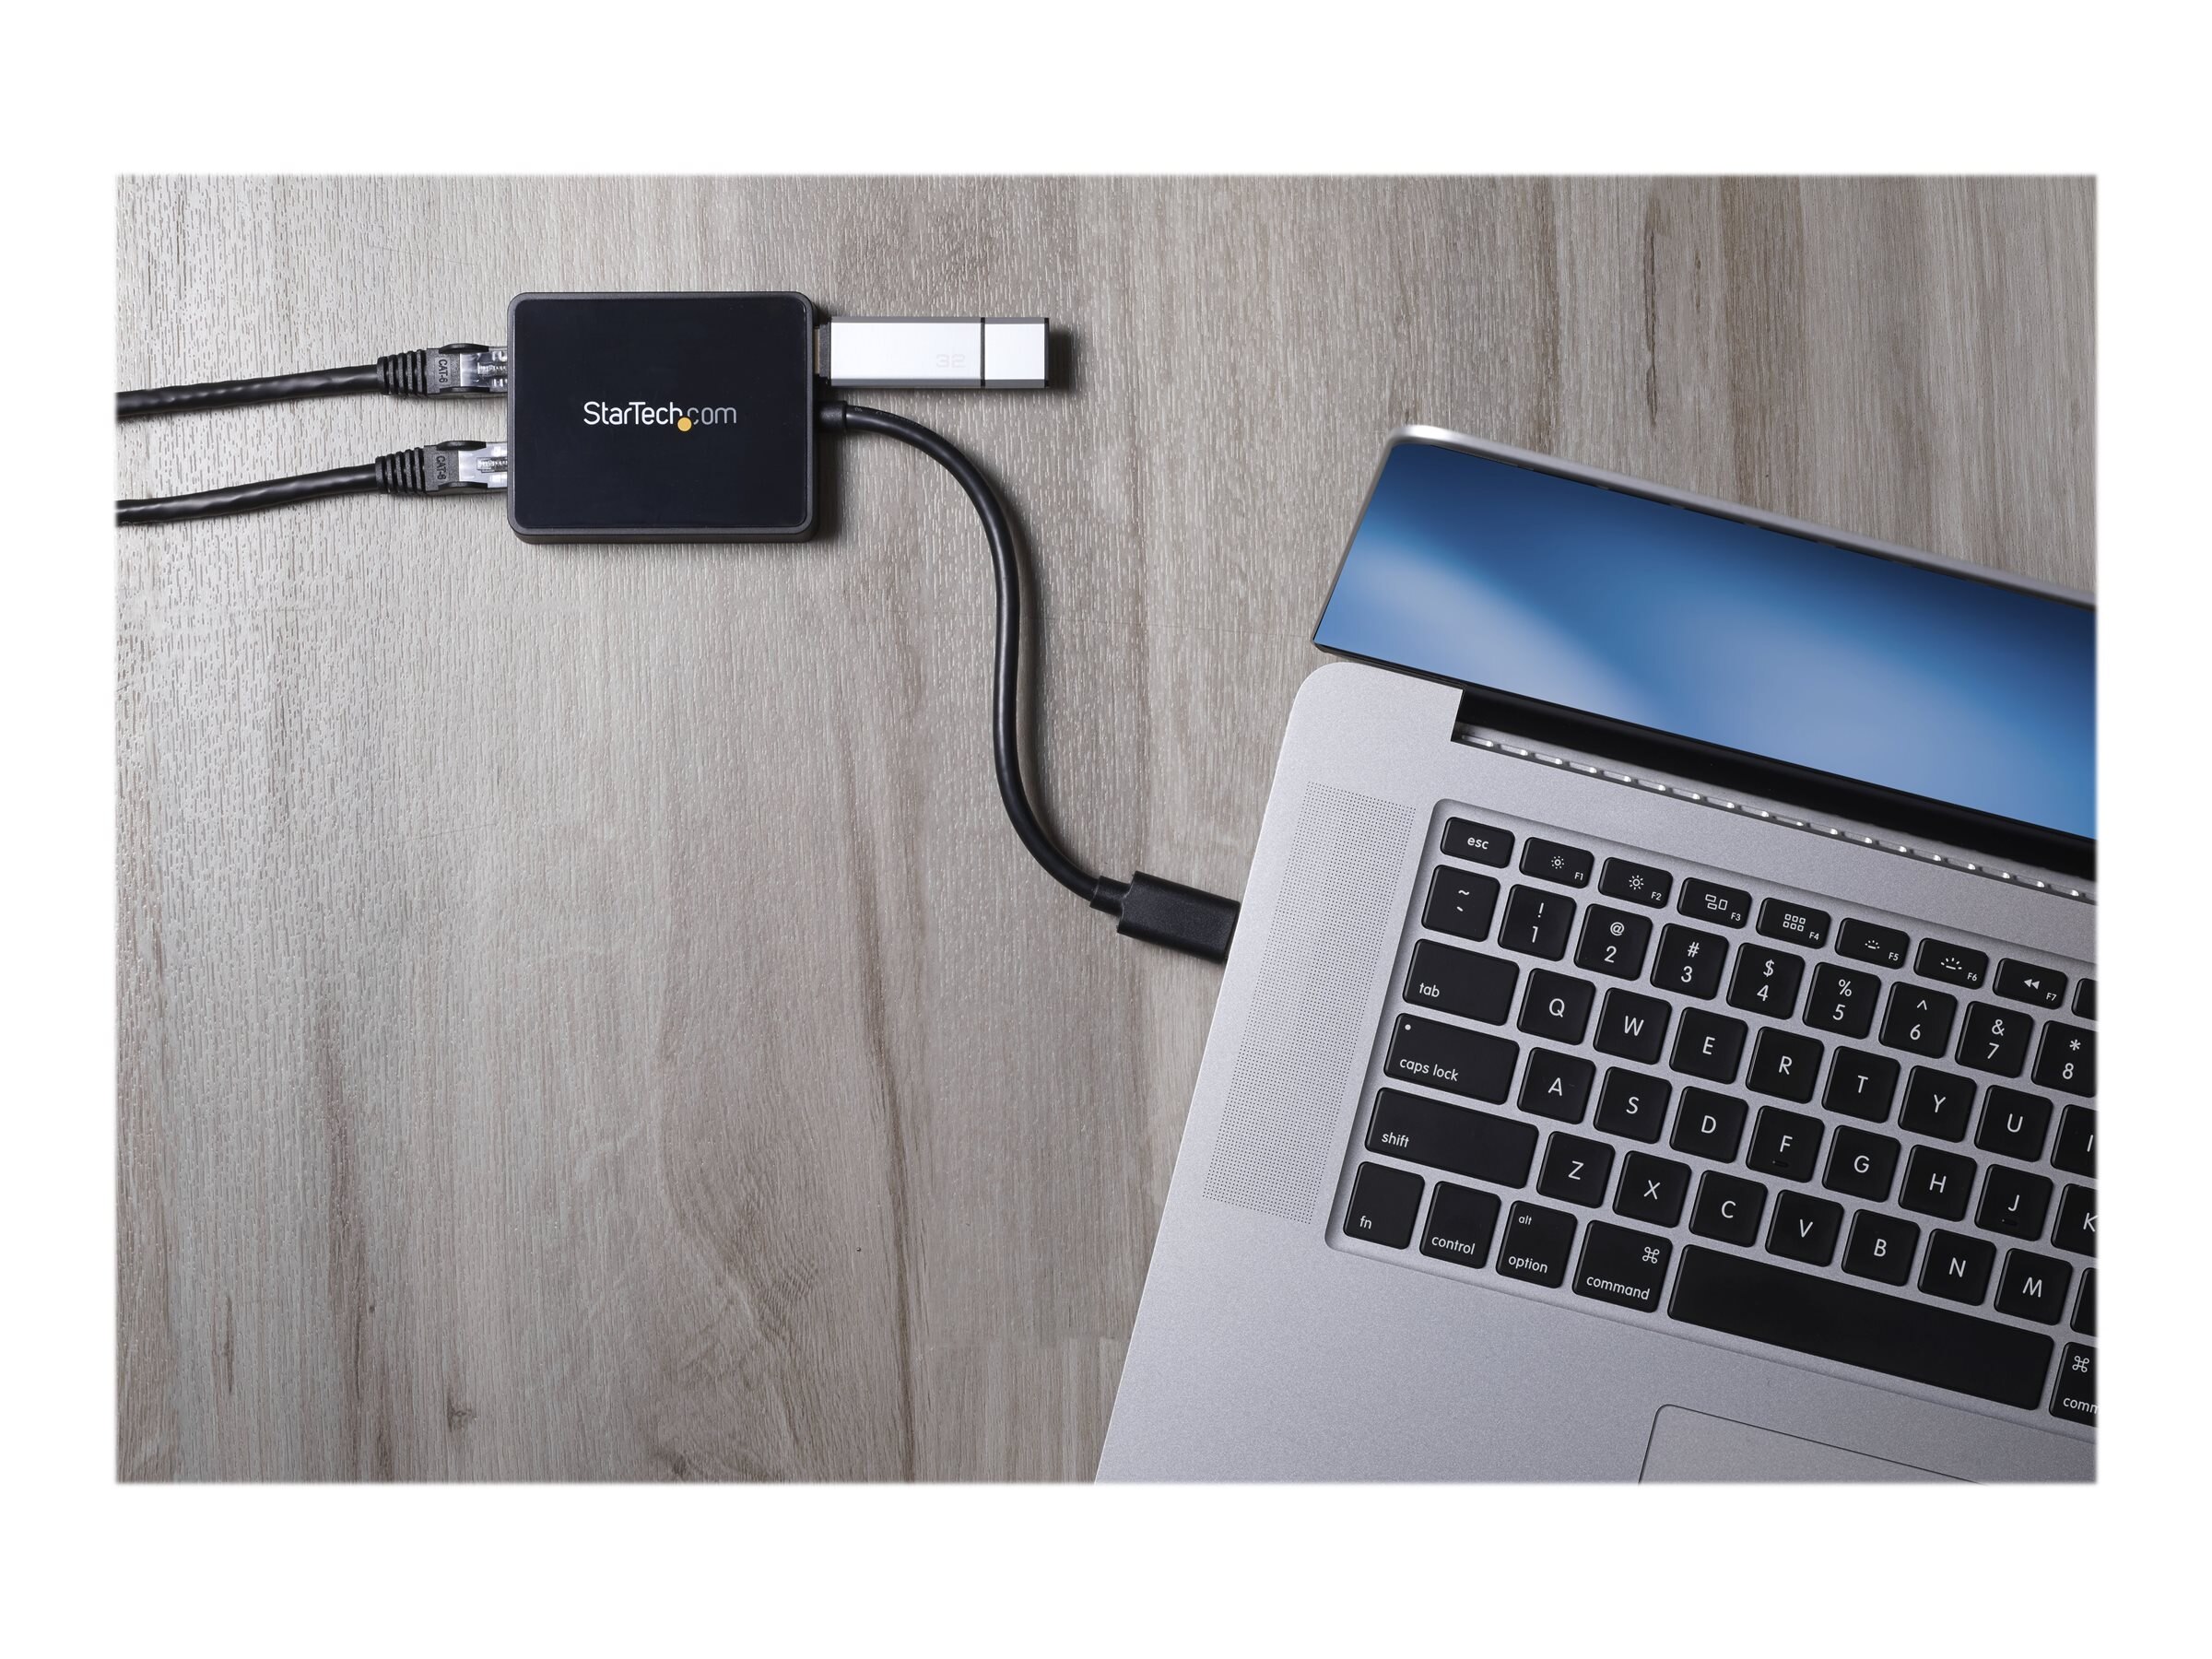 USB 3.0 to Dual Port Gigabit Ethernet Adapter w/ USB Port, 10/100/1000  Mbps, USB Gigabit LAN Network NIC Adapter